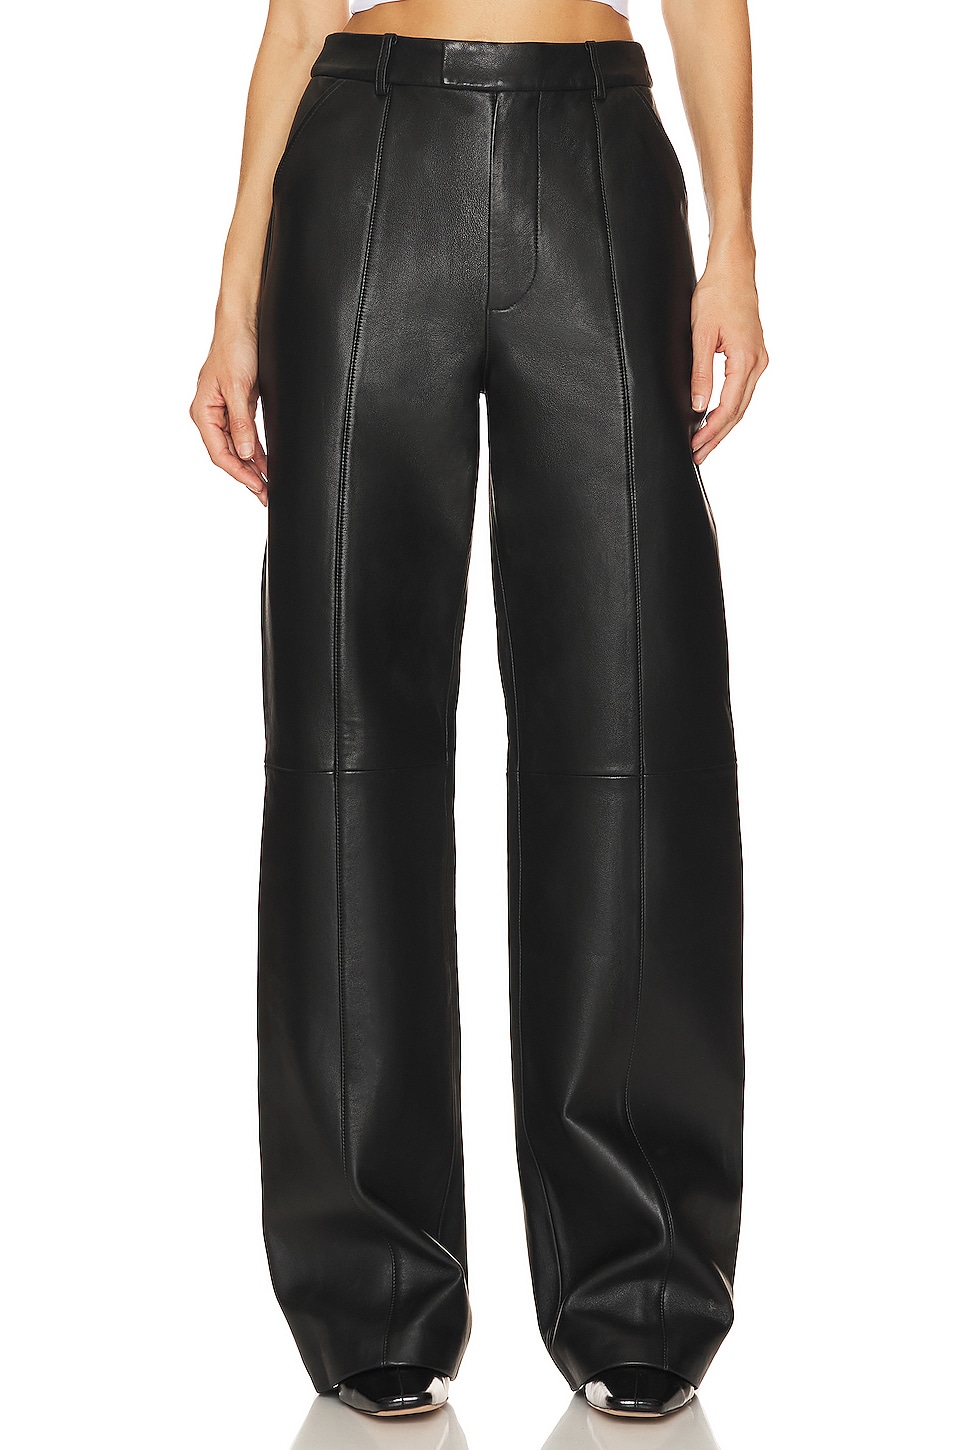 Ena Pelly x Rj Highwaisted Leather Pant in Black | REVOLVE